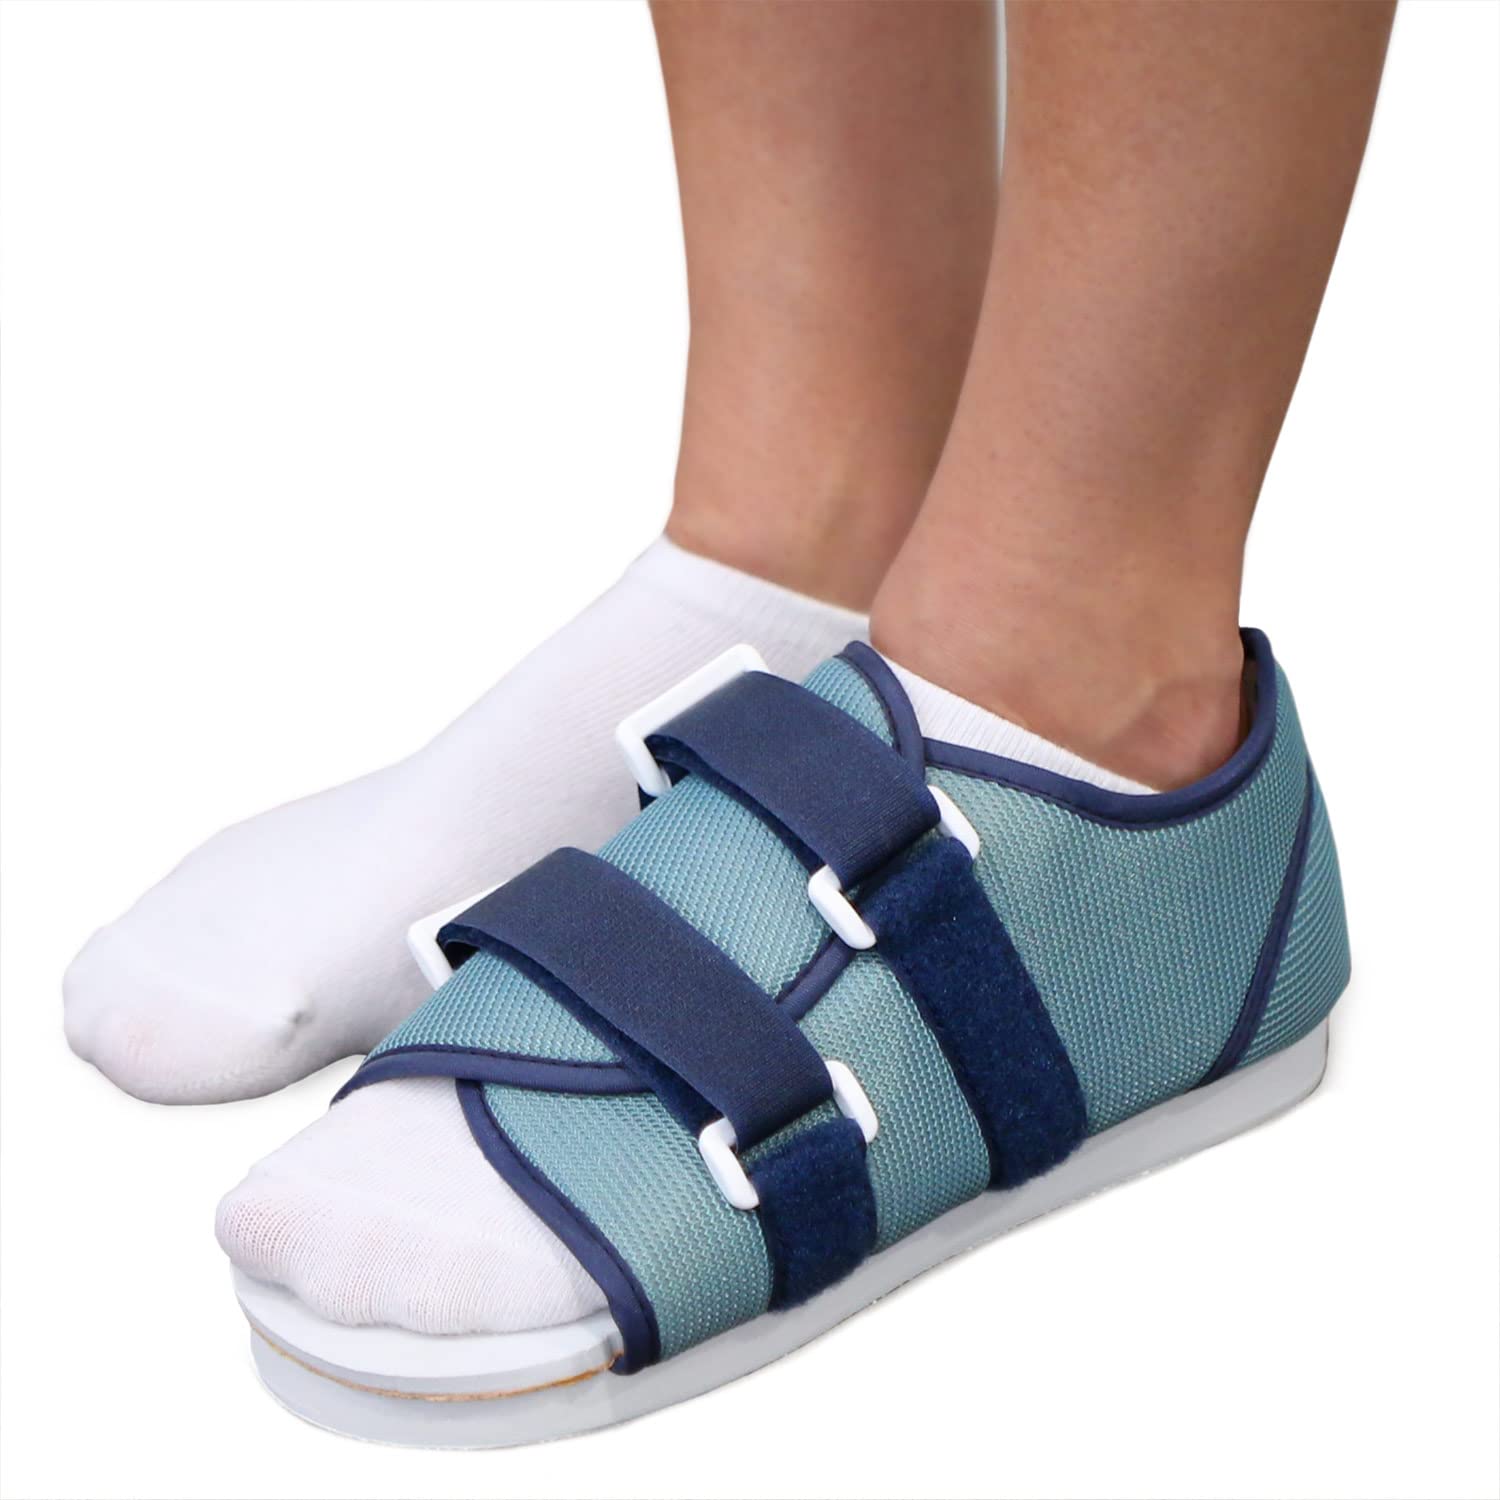 DMI Post Op Shoe, Surgical Walking Shoe or Walking [...]